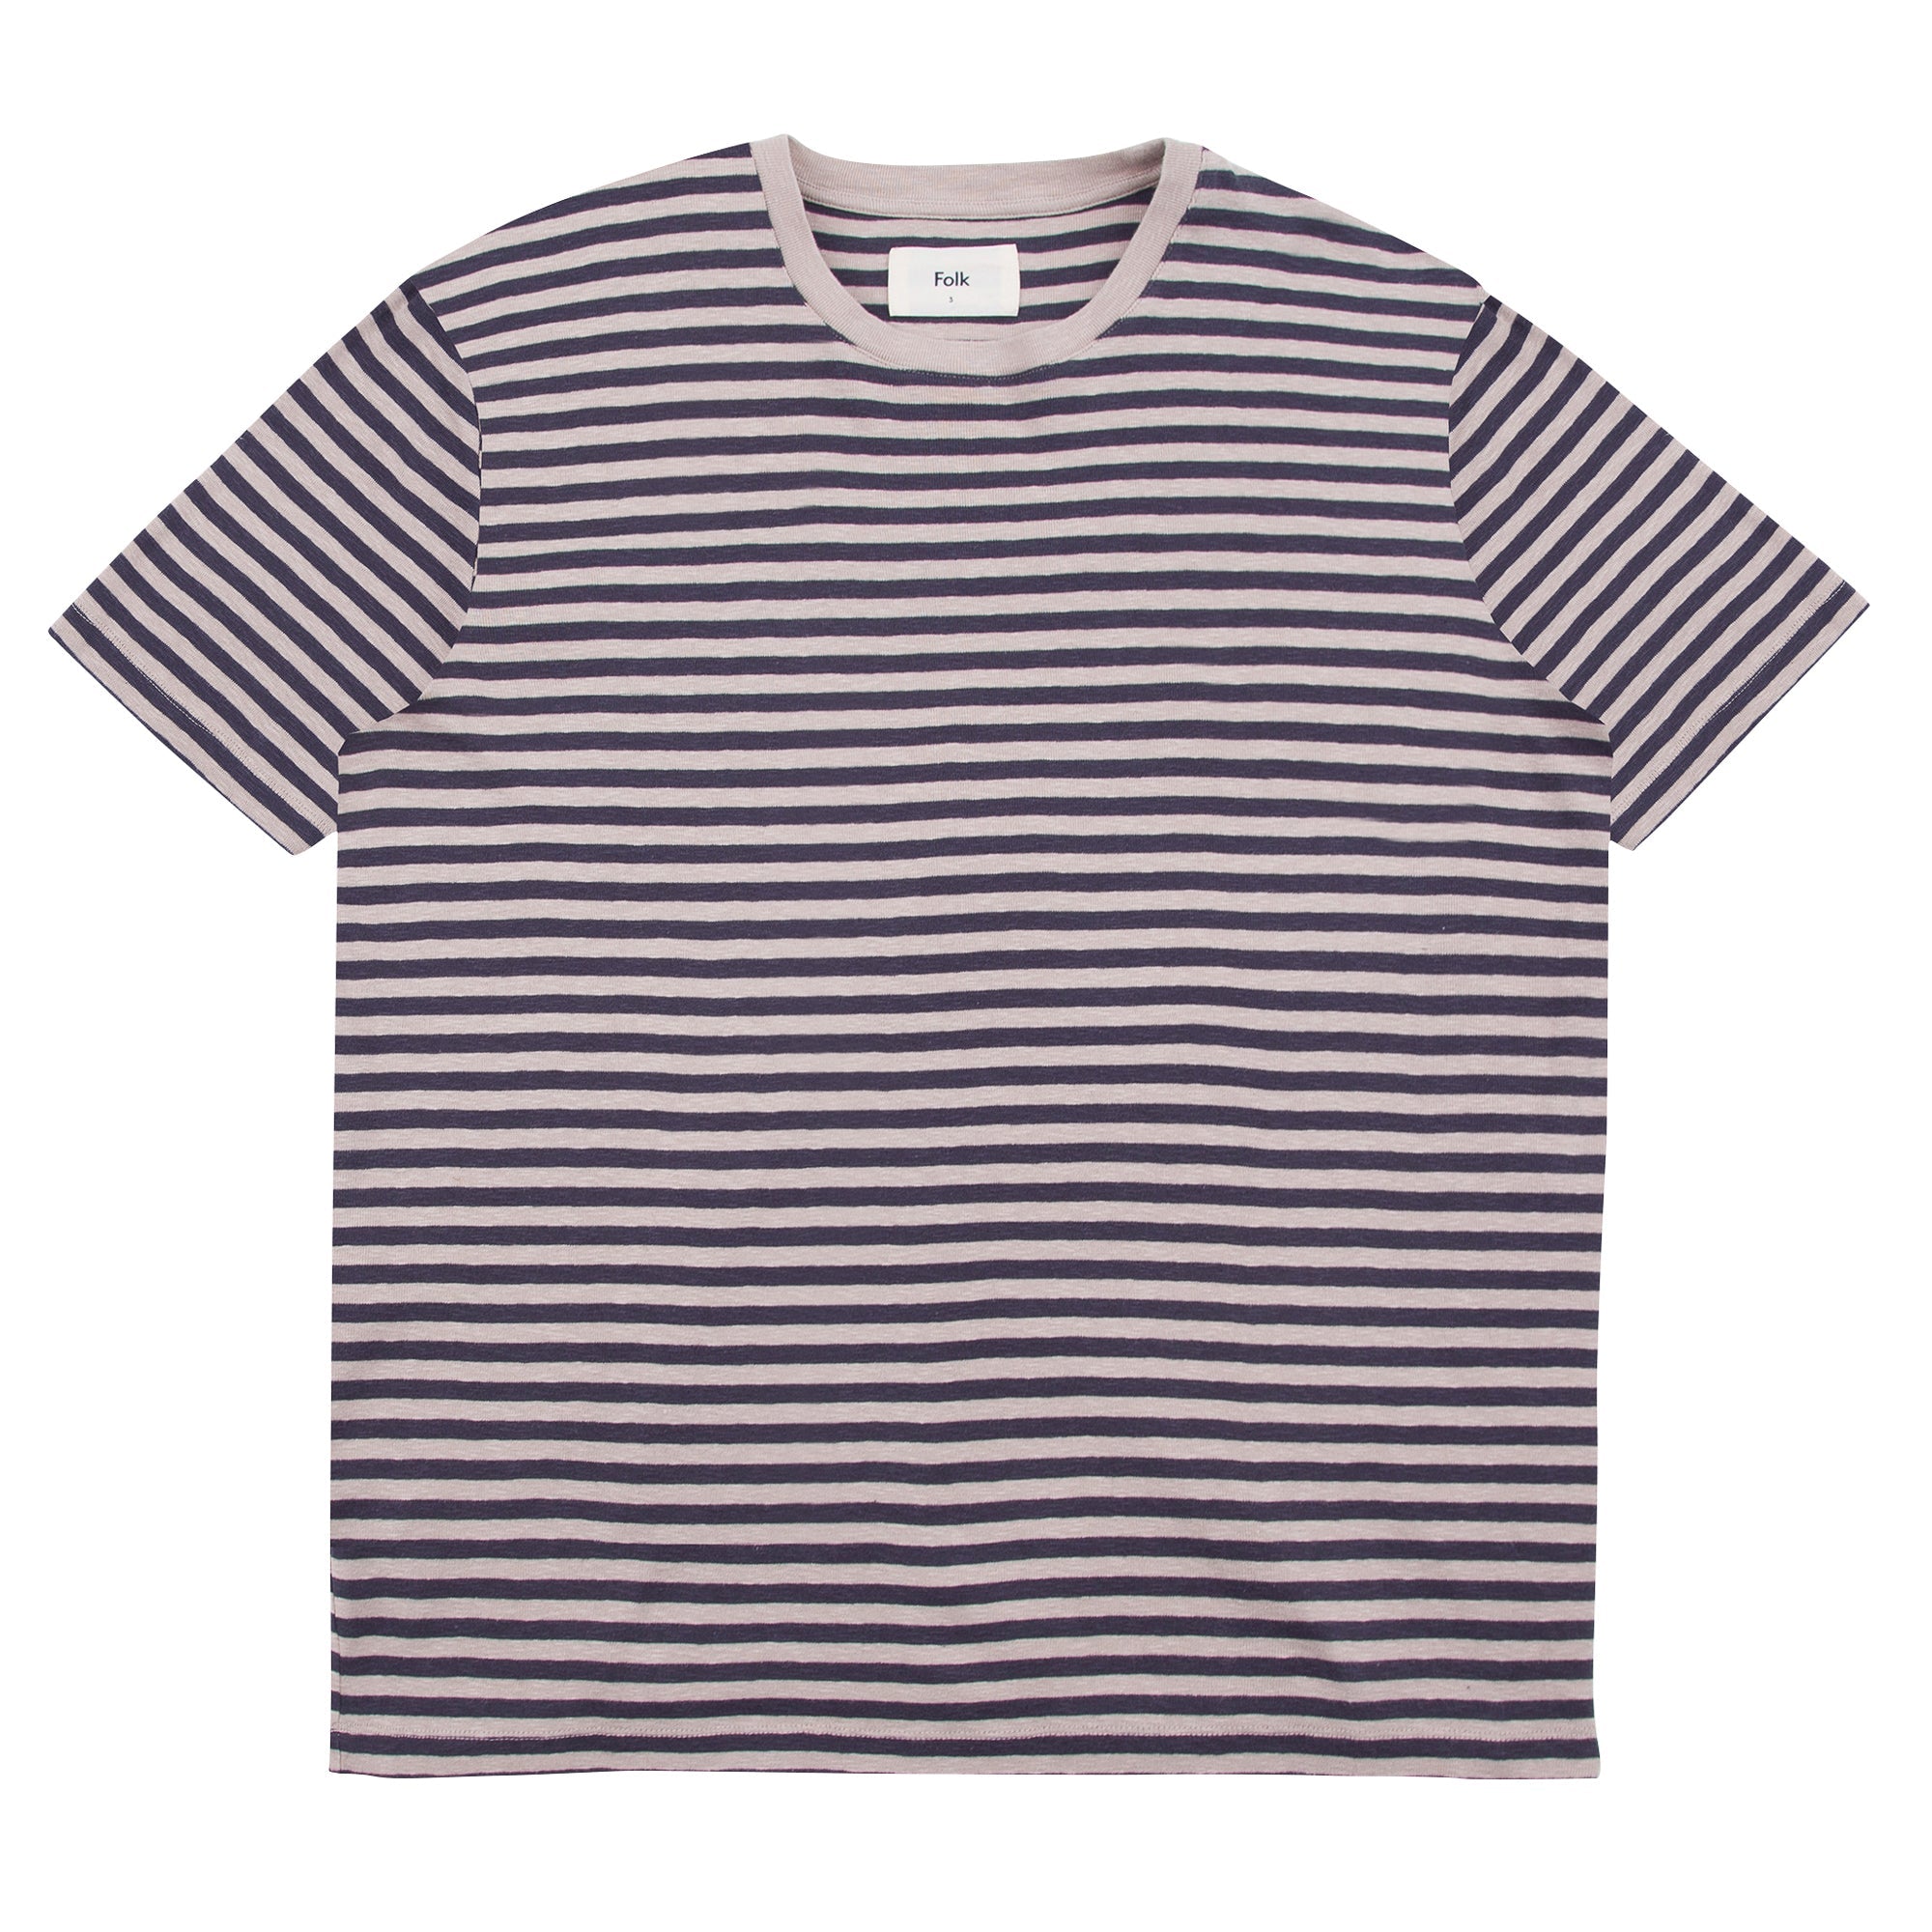 Folk Classic Stripe T-Shirt - Charcoal / Ecru